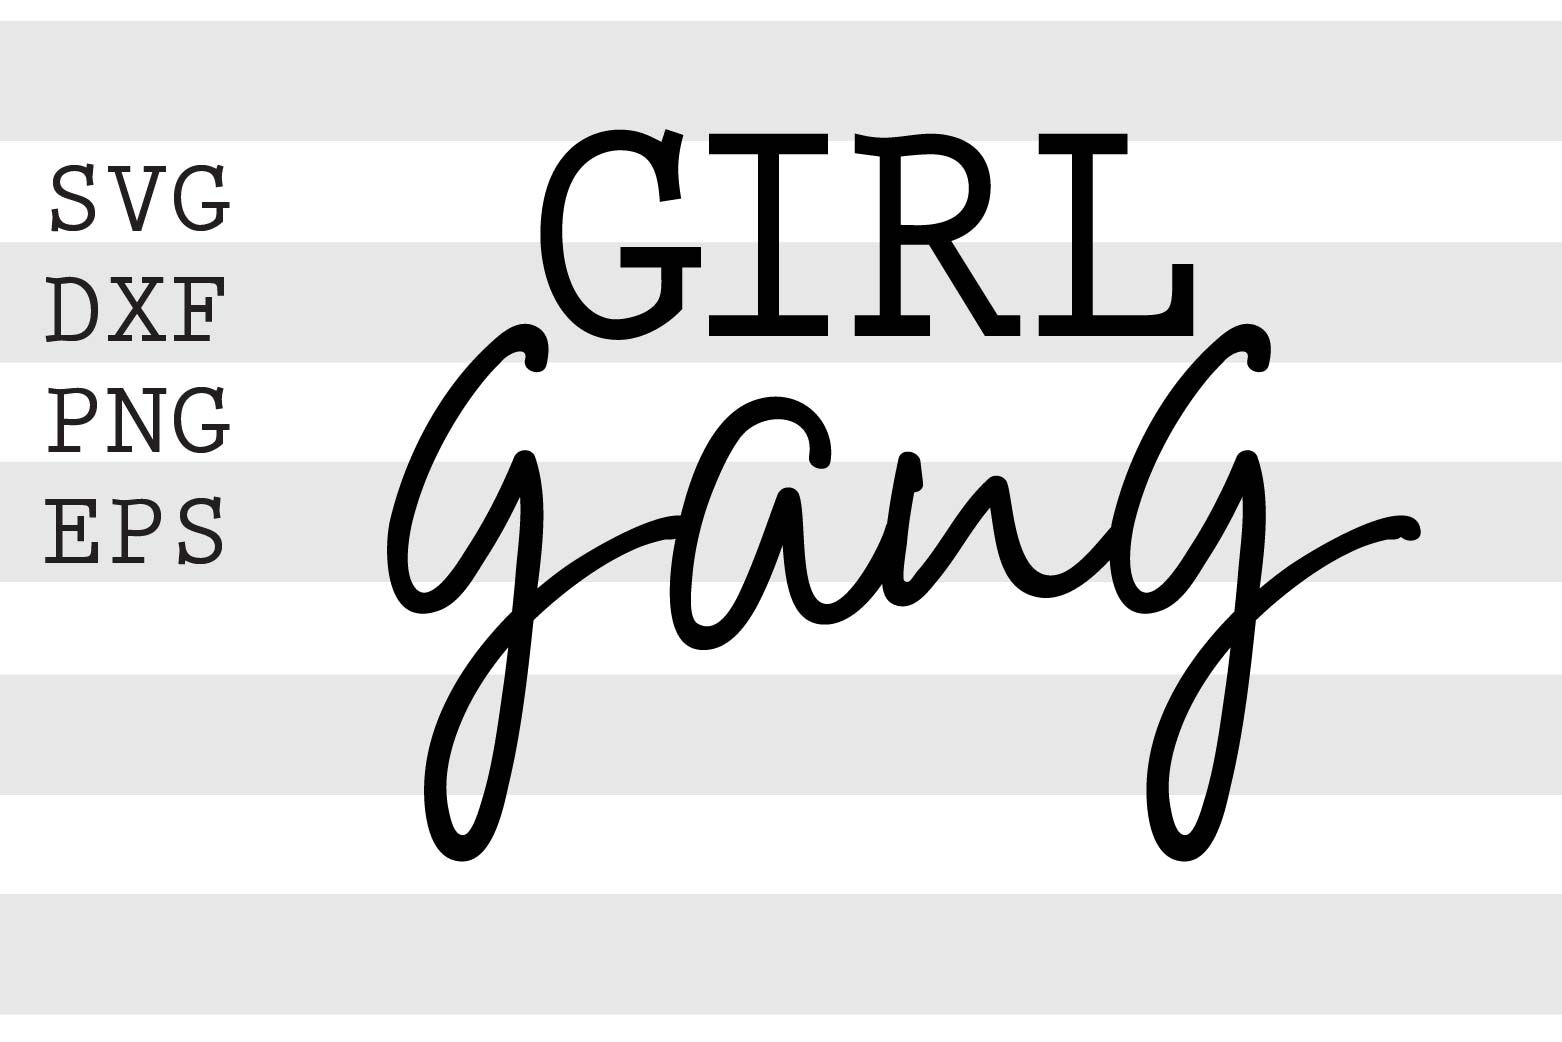 Download Girl Gang I Run A Girl Gang Svg By Spoonyprint Thehungryjpeg Com